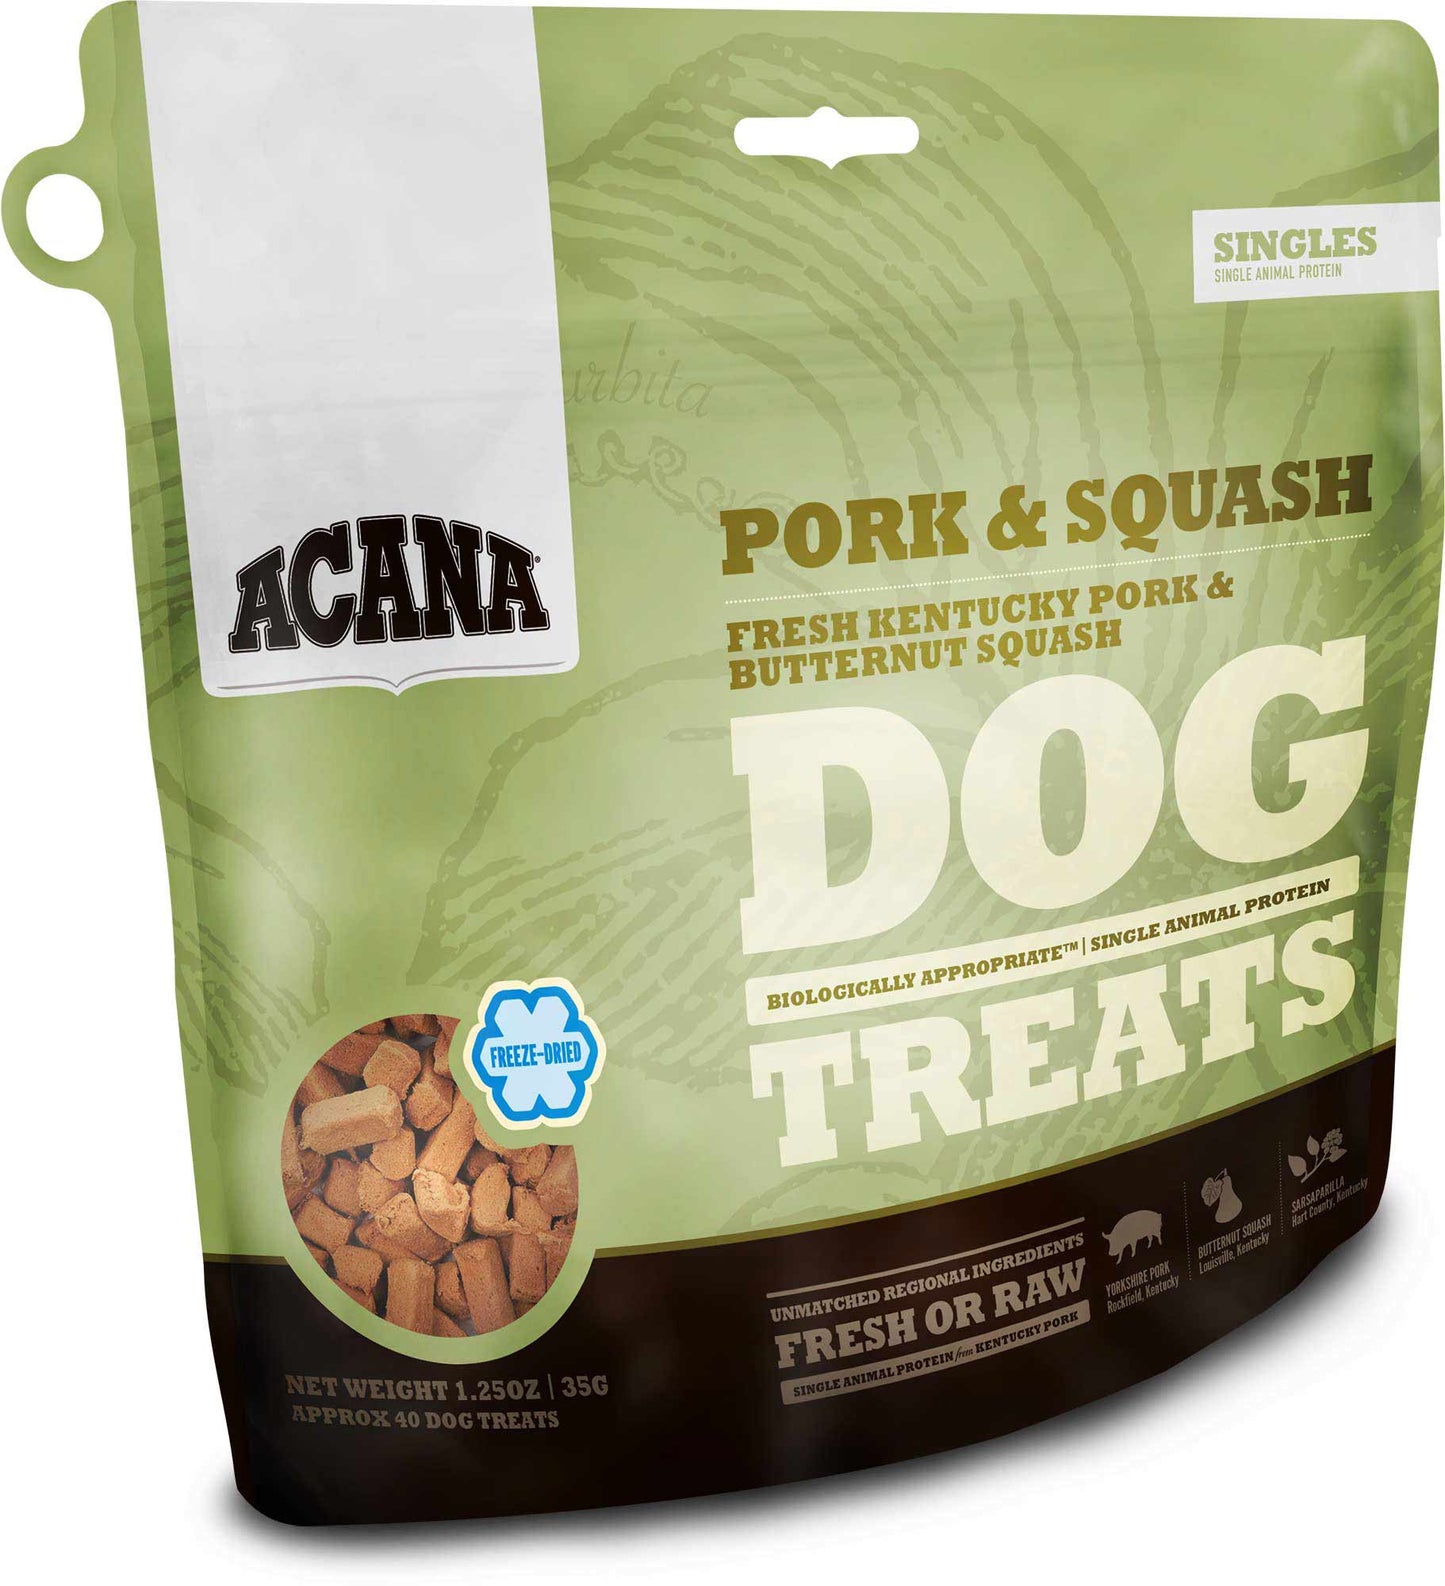 ACANA Singles Pork & Squash Dog Treats